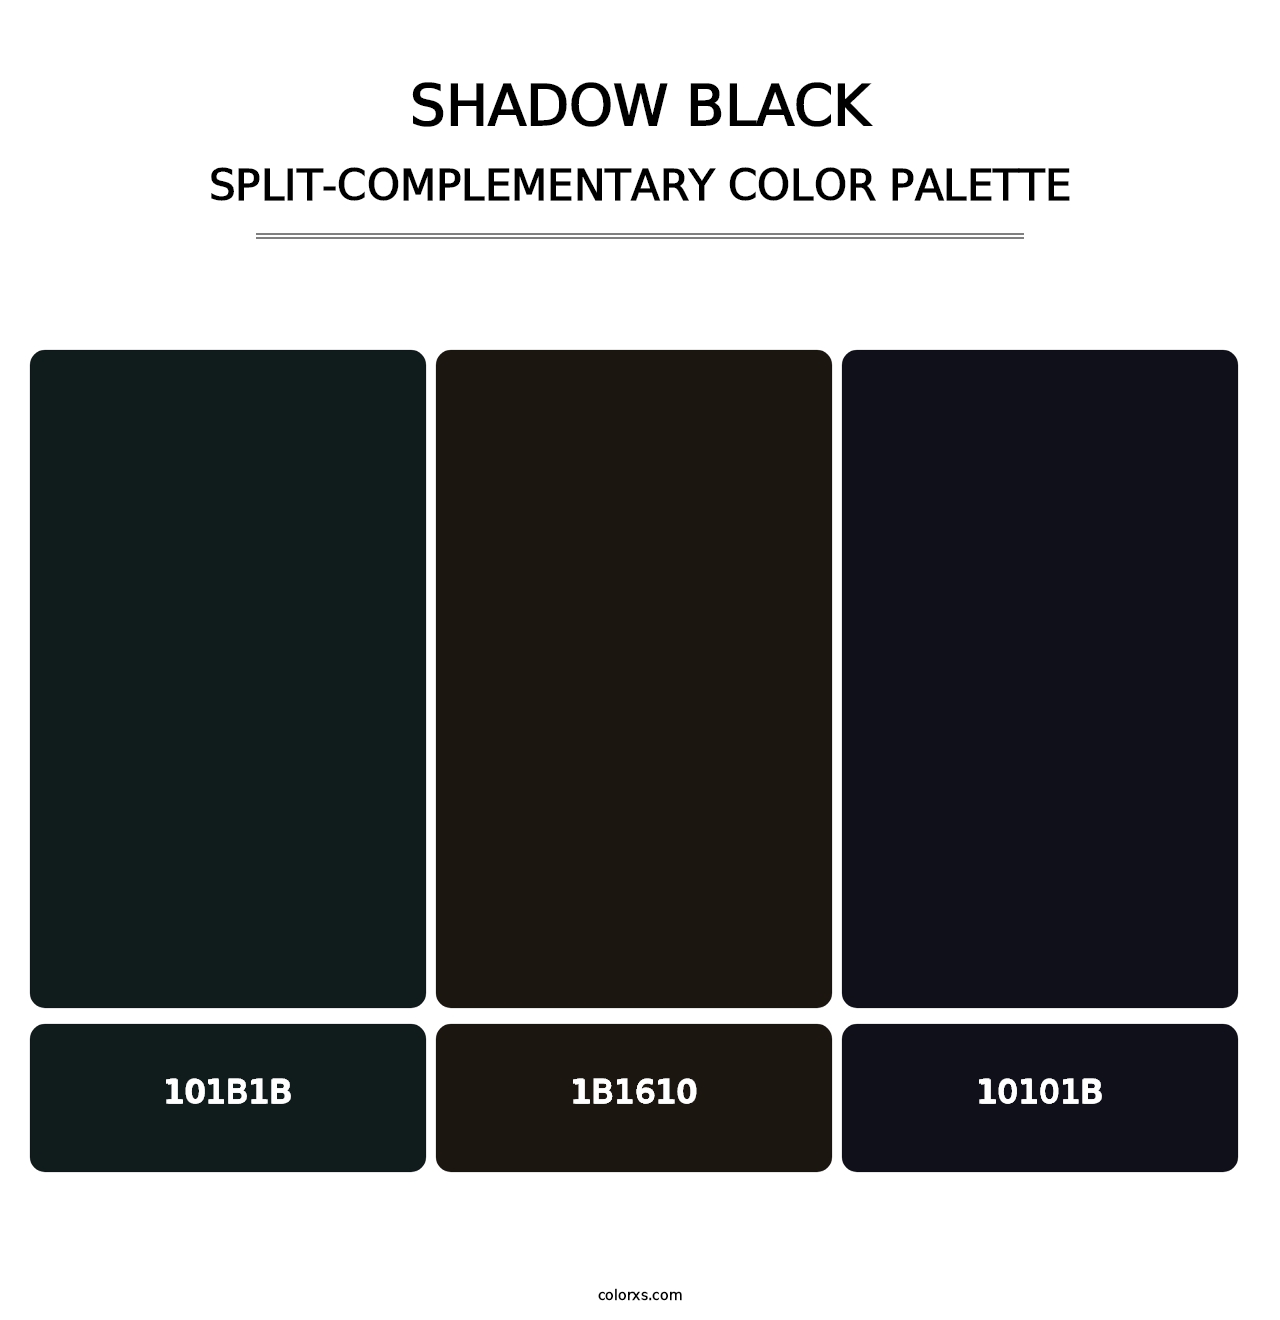 Shadow Black - Split-Complementary Color Palette